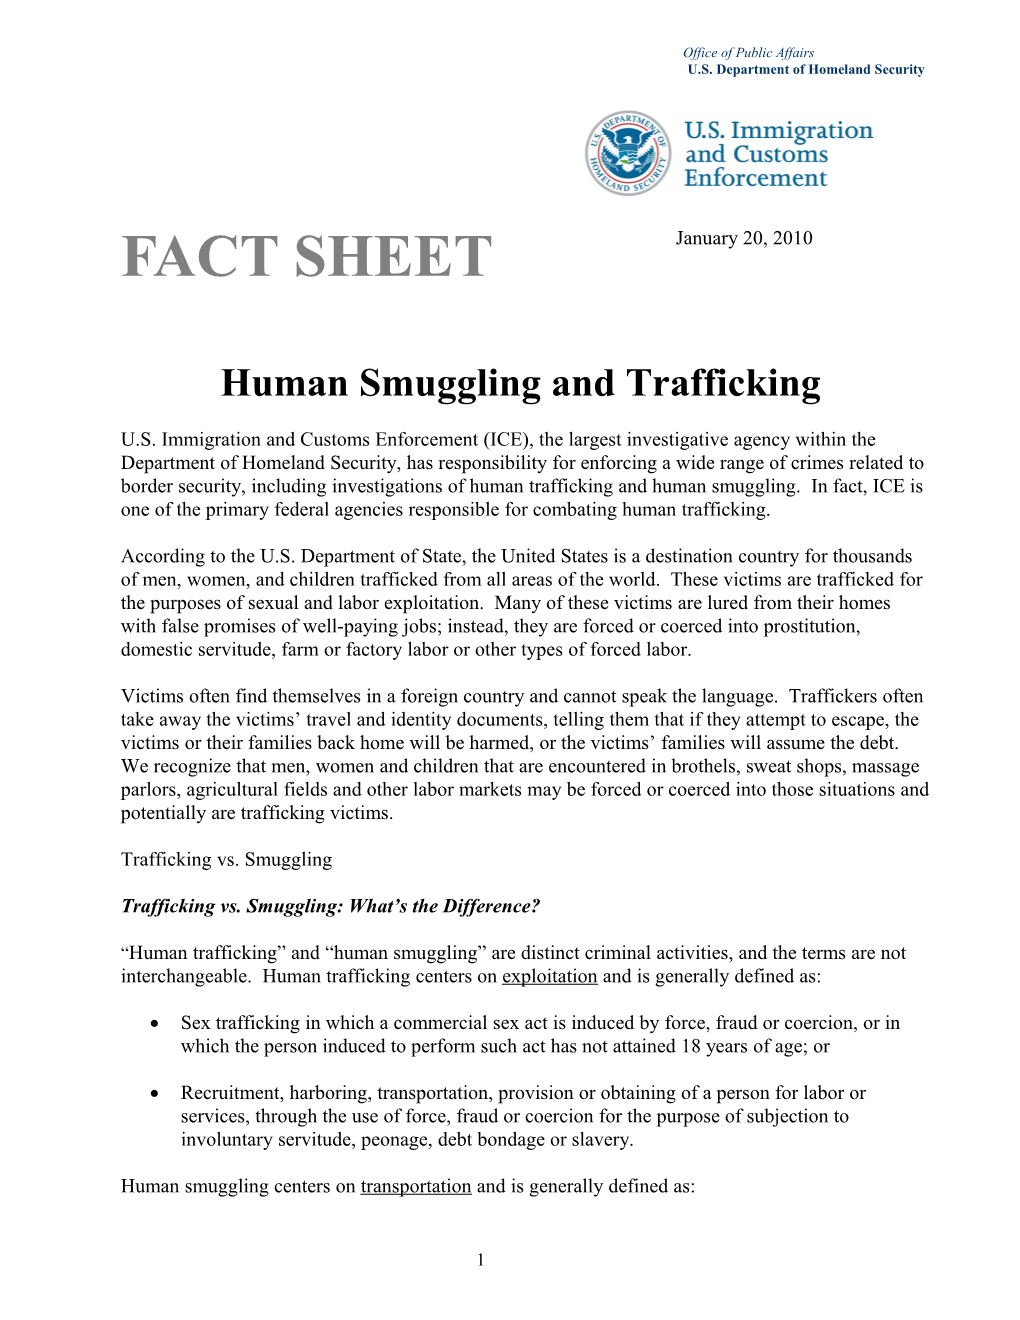 Human Smuggling and Trafficking